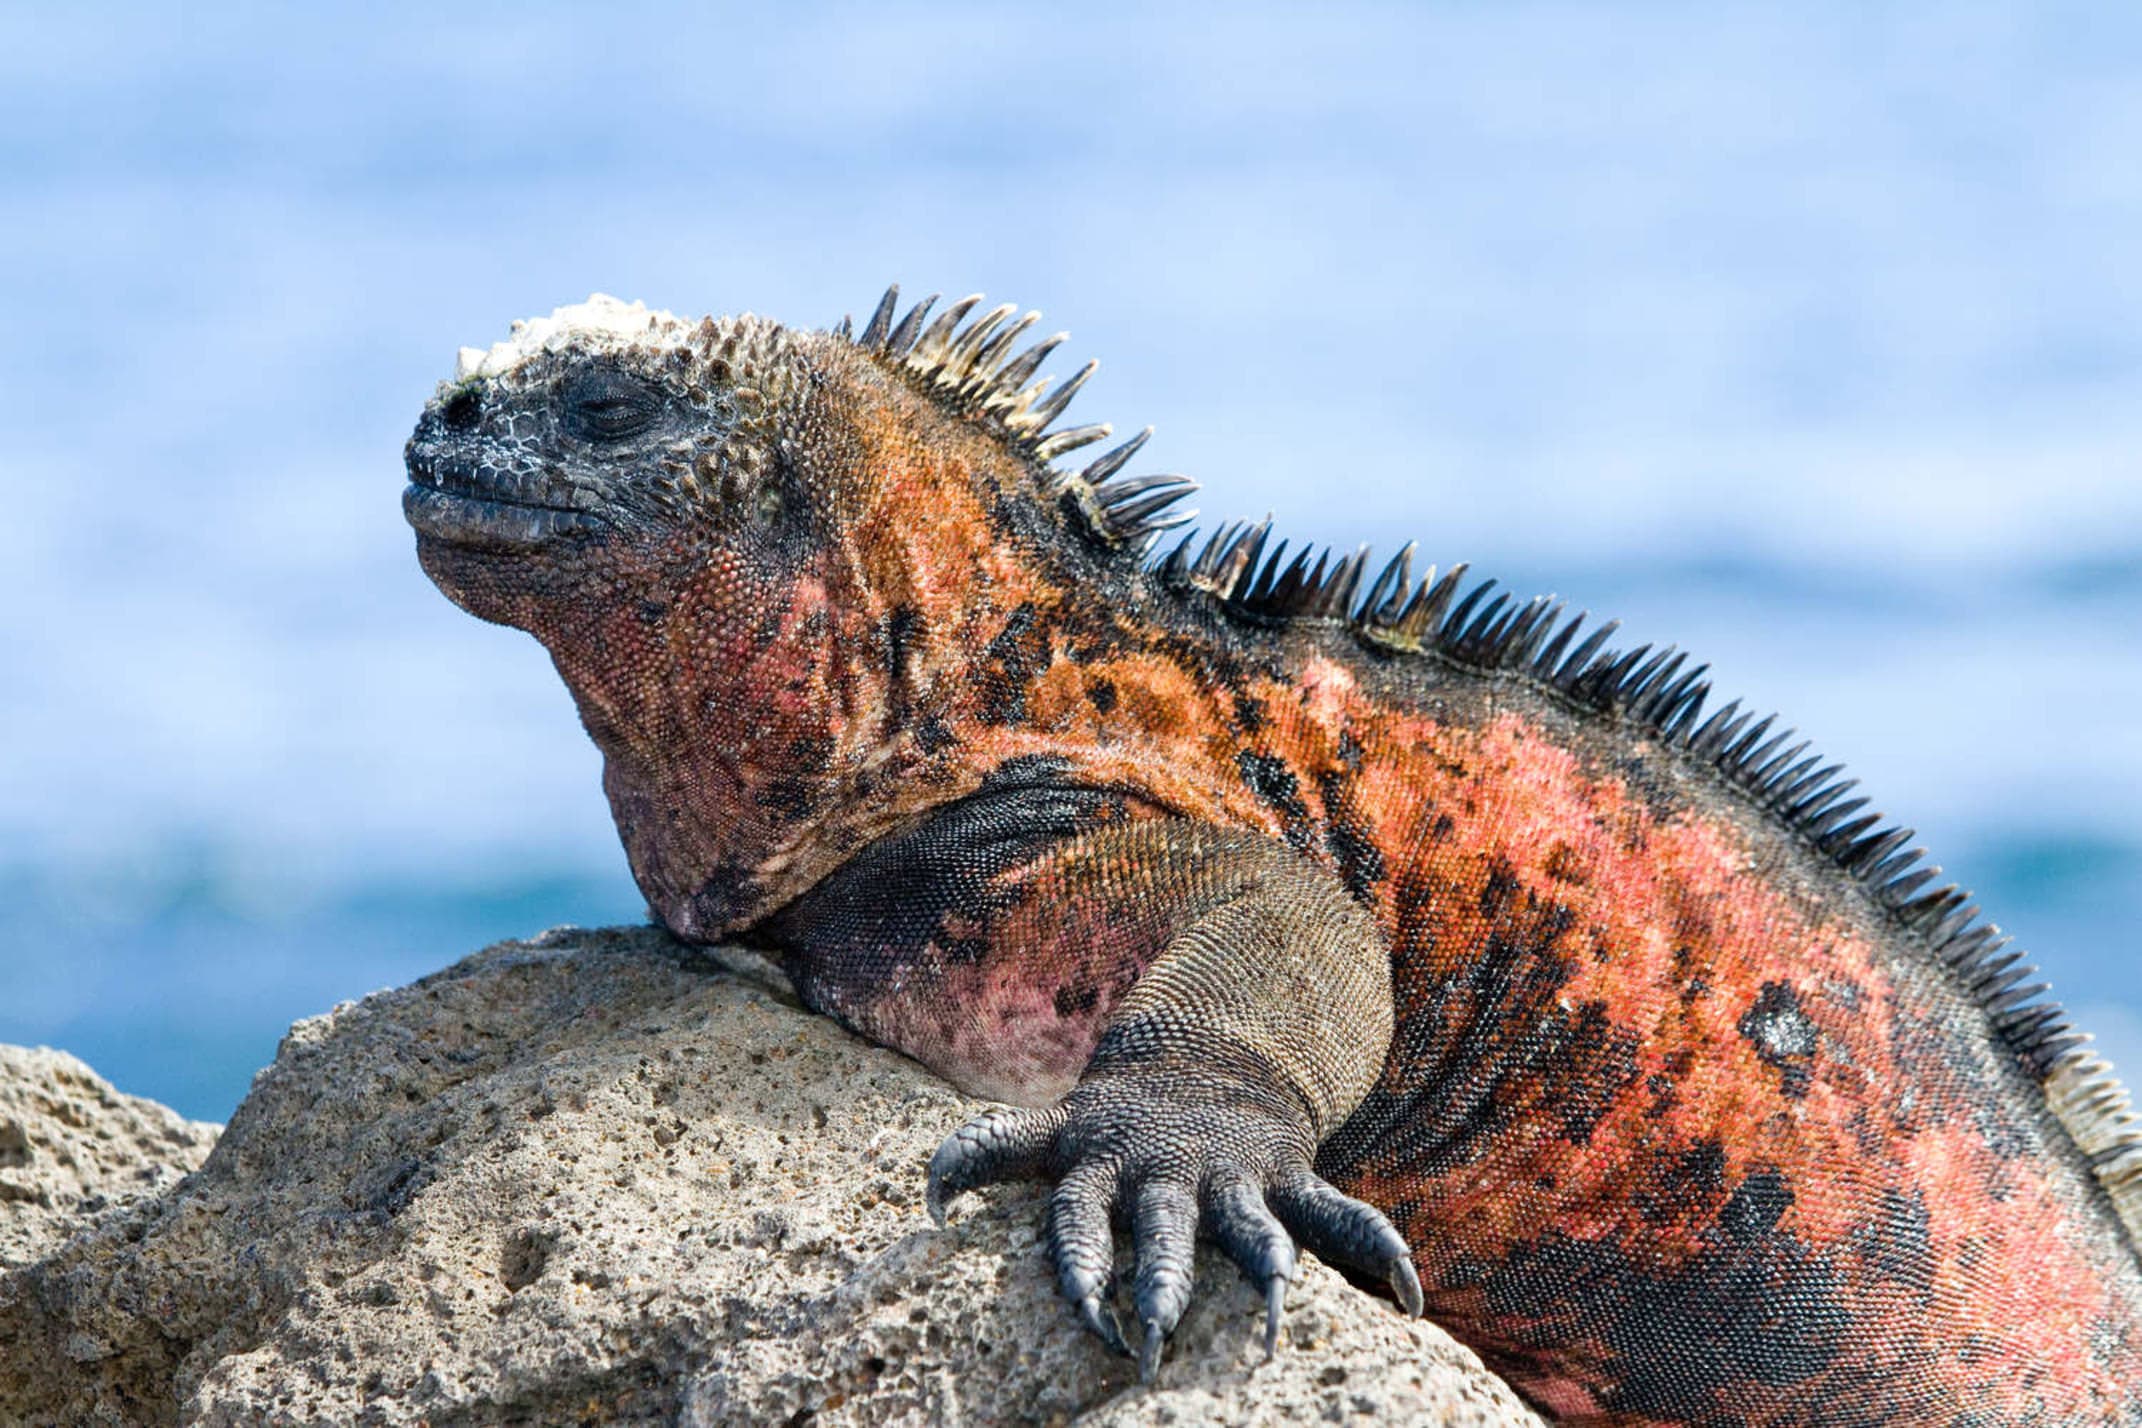 Ecuador galapagos islands galapagos marine iguana amblyrhynchus cristatus